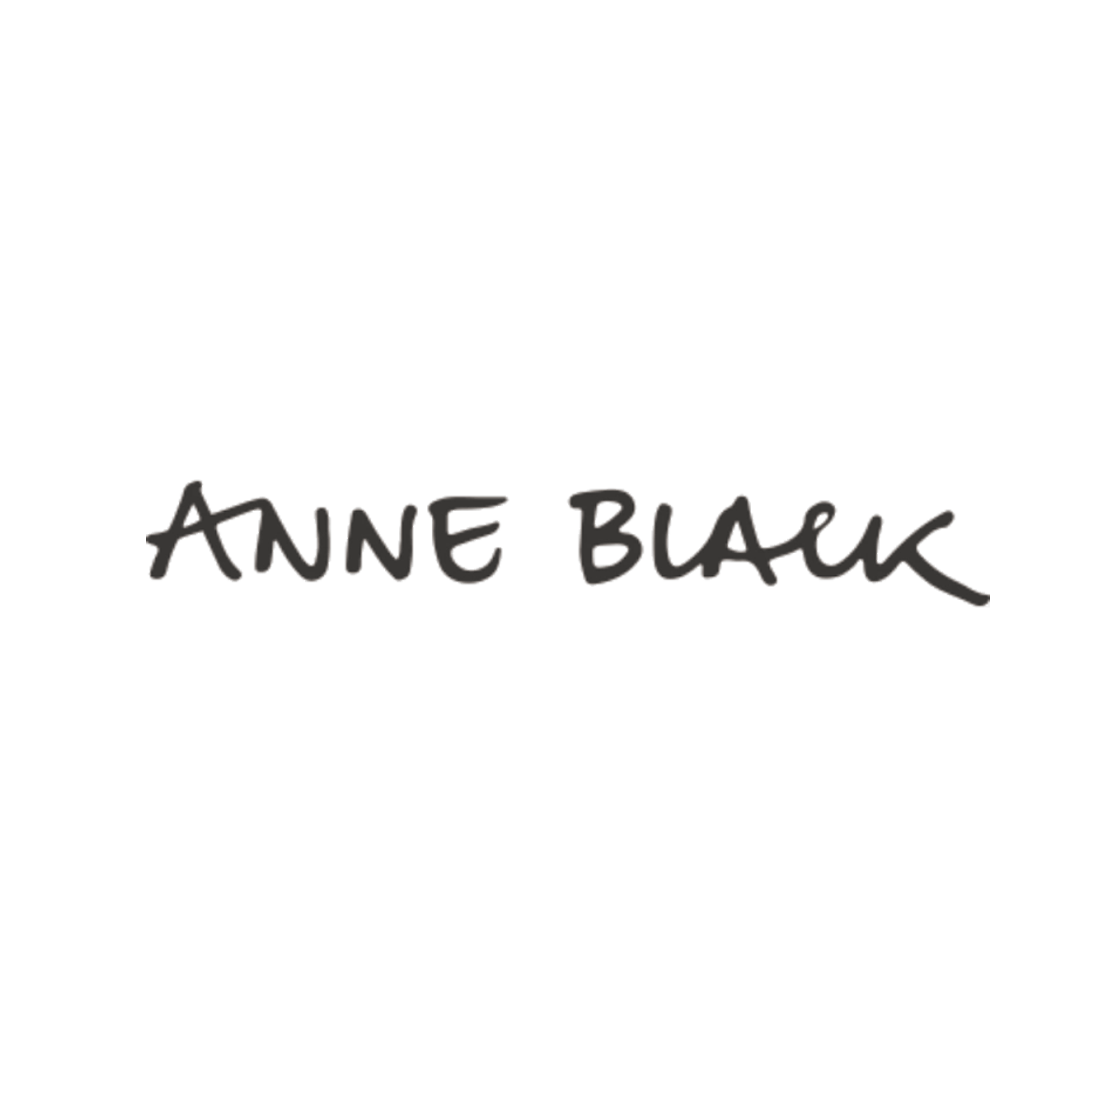 Anne Black logo